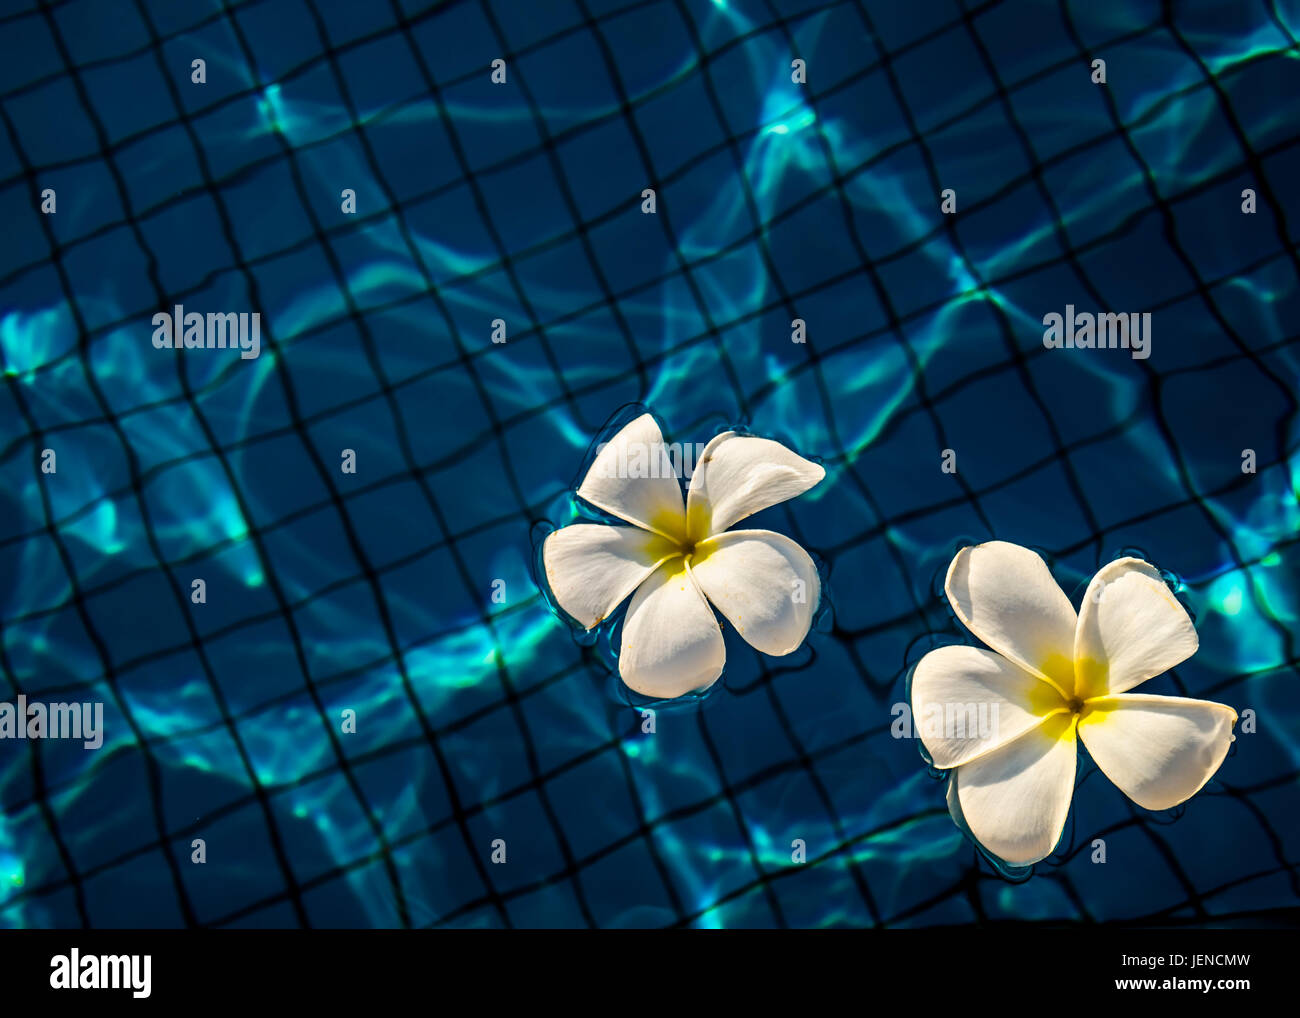 Frangipani flowers in a swimming pool Stock Photo